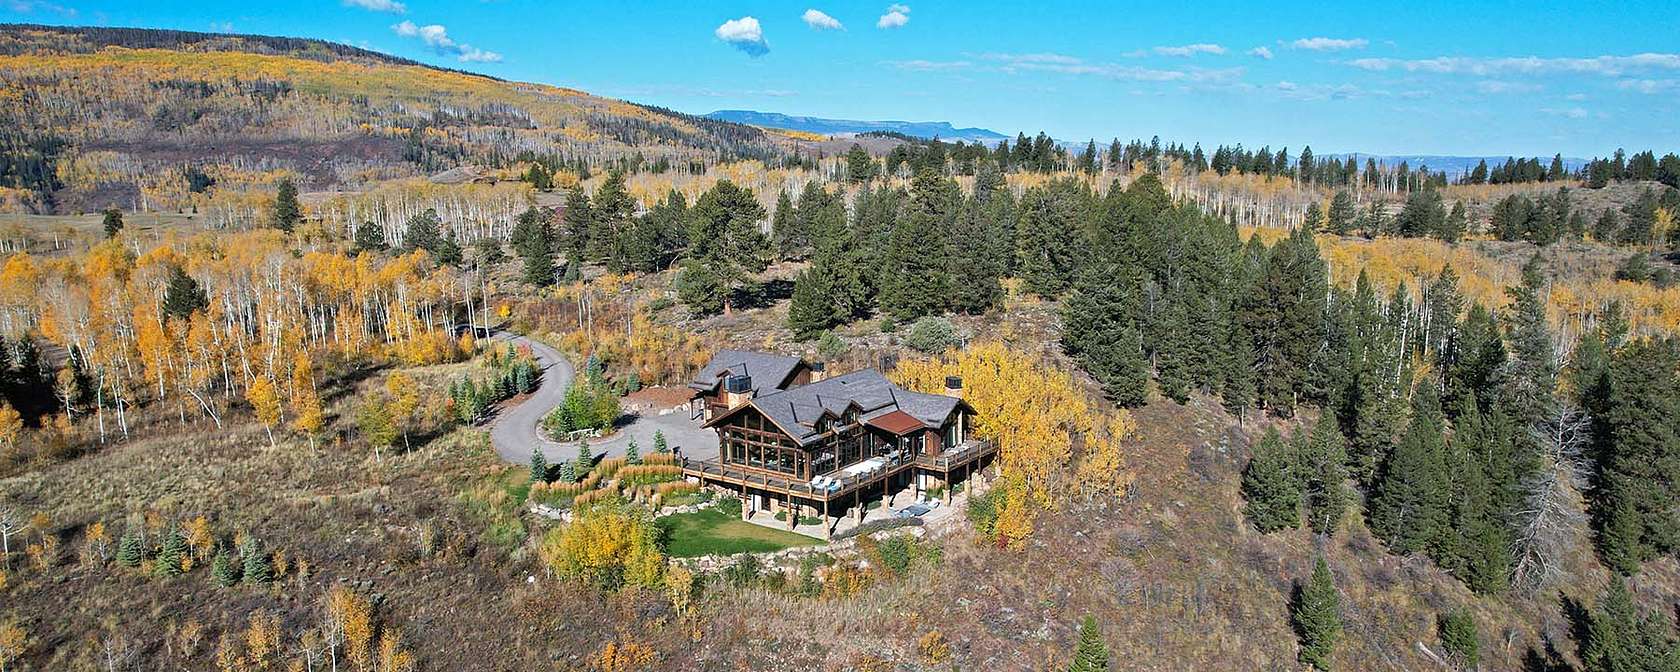 35.1 Acres of Land for Sale in Toponas, Colorado